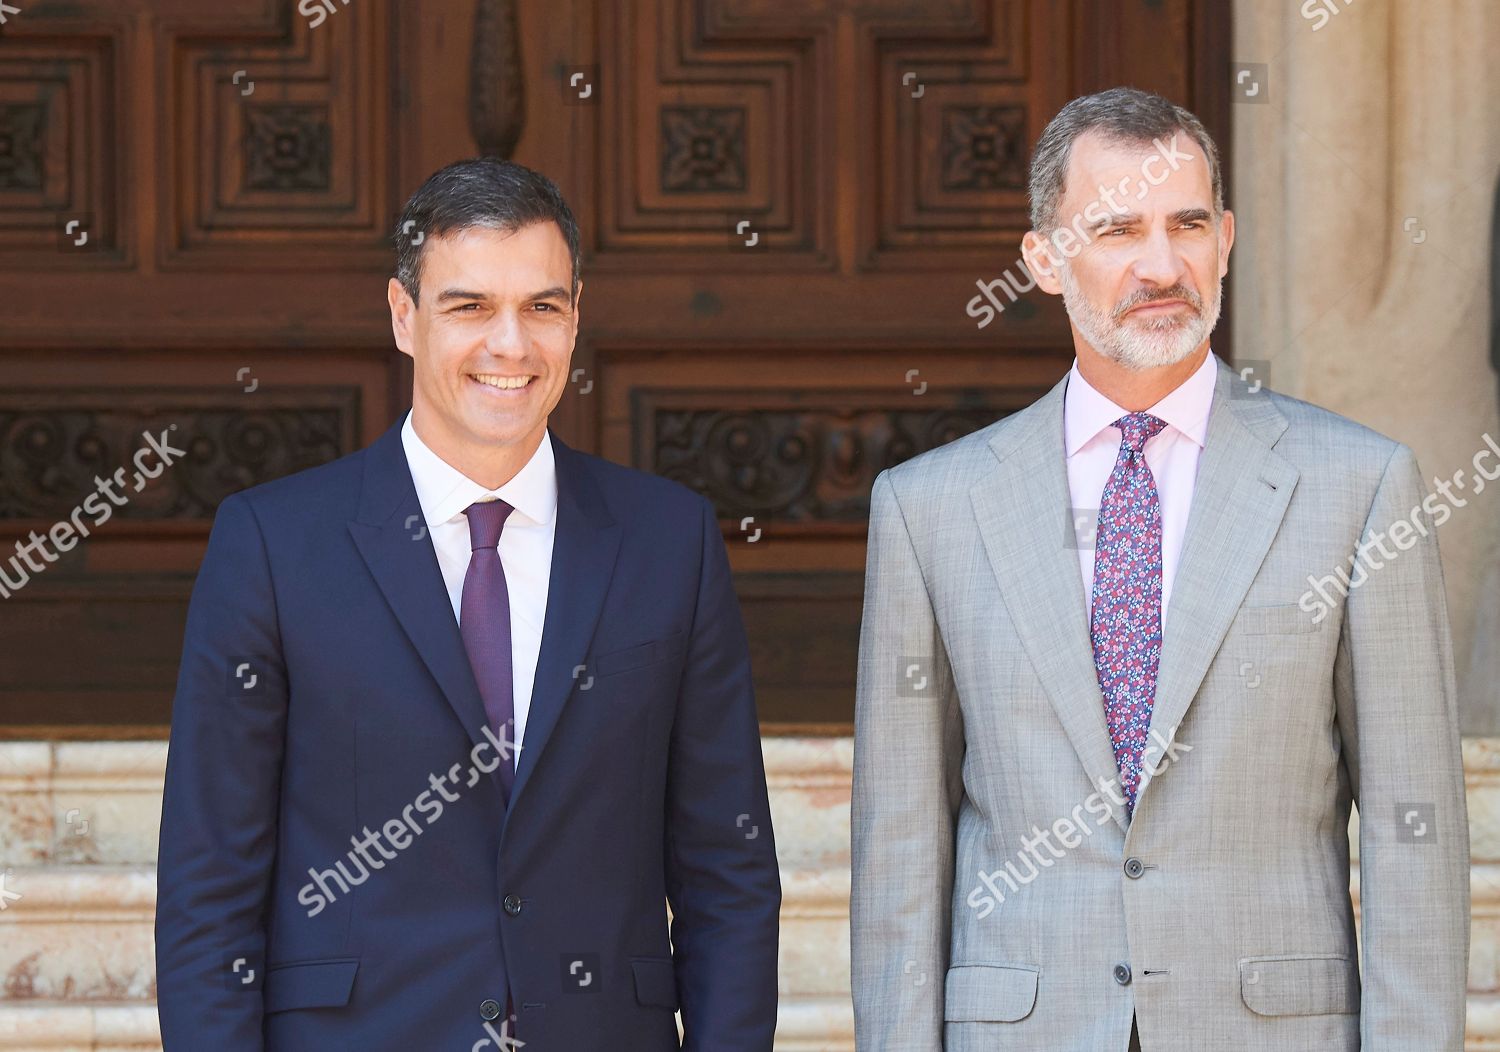 king-felipe-vi-meets-with-spanish-prime-minister-pedro-sanchez-palma-de-majorca-spain-shutterstock-editorial-9781327n.jpg